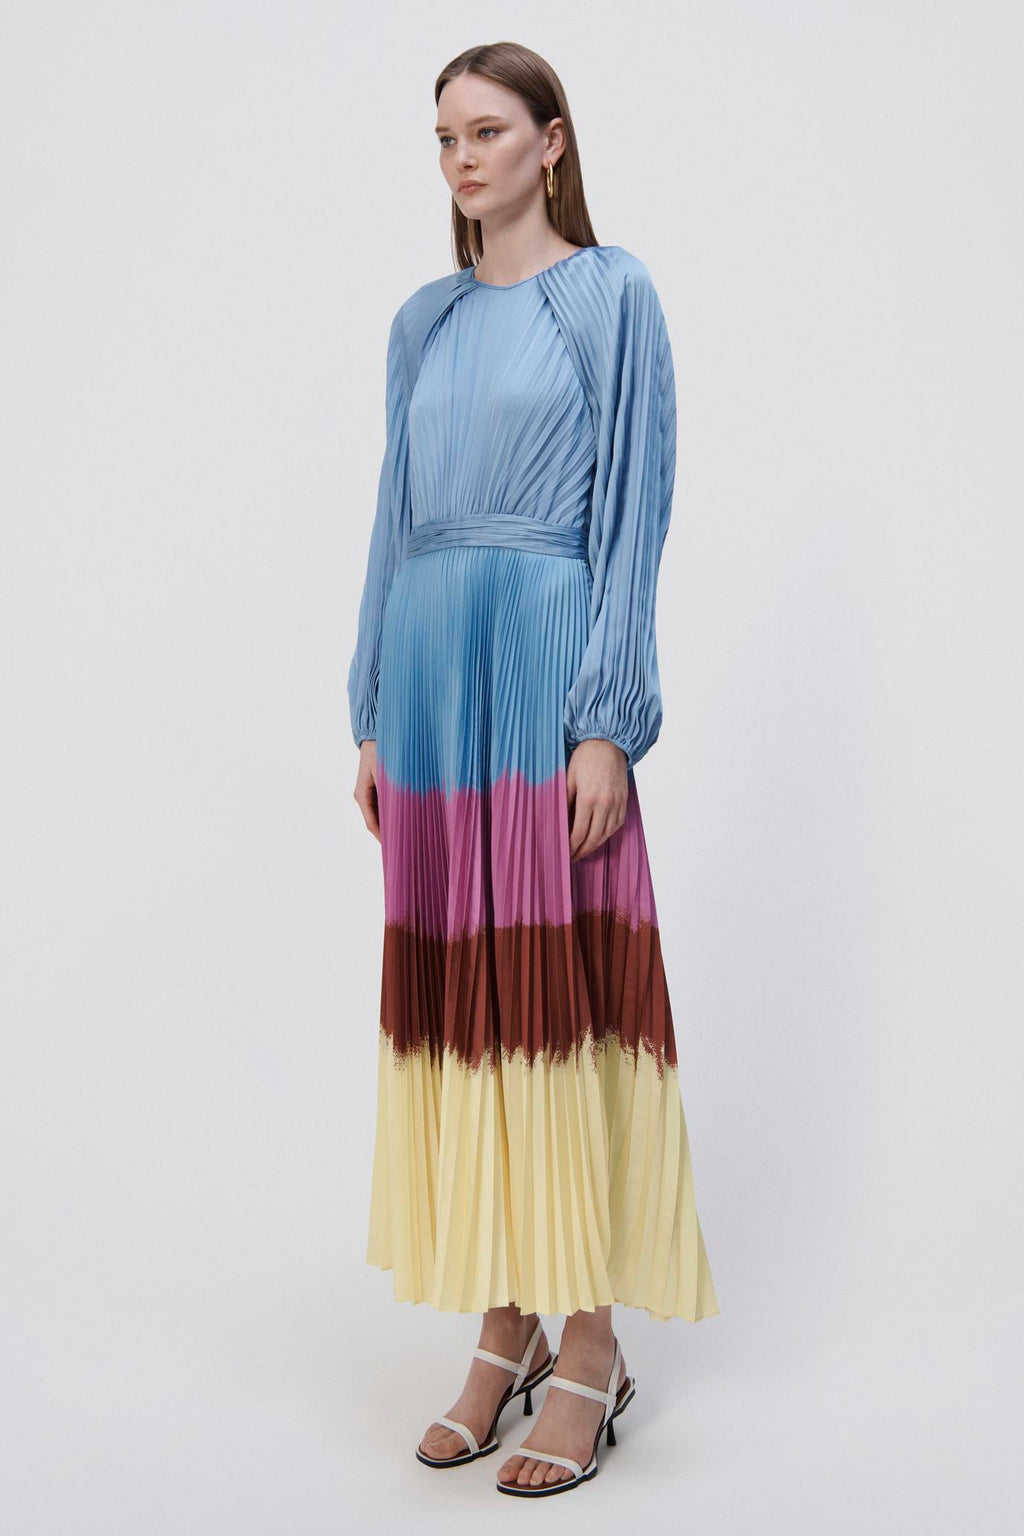 Suzie Dip Dye Midi Dress